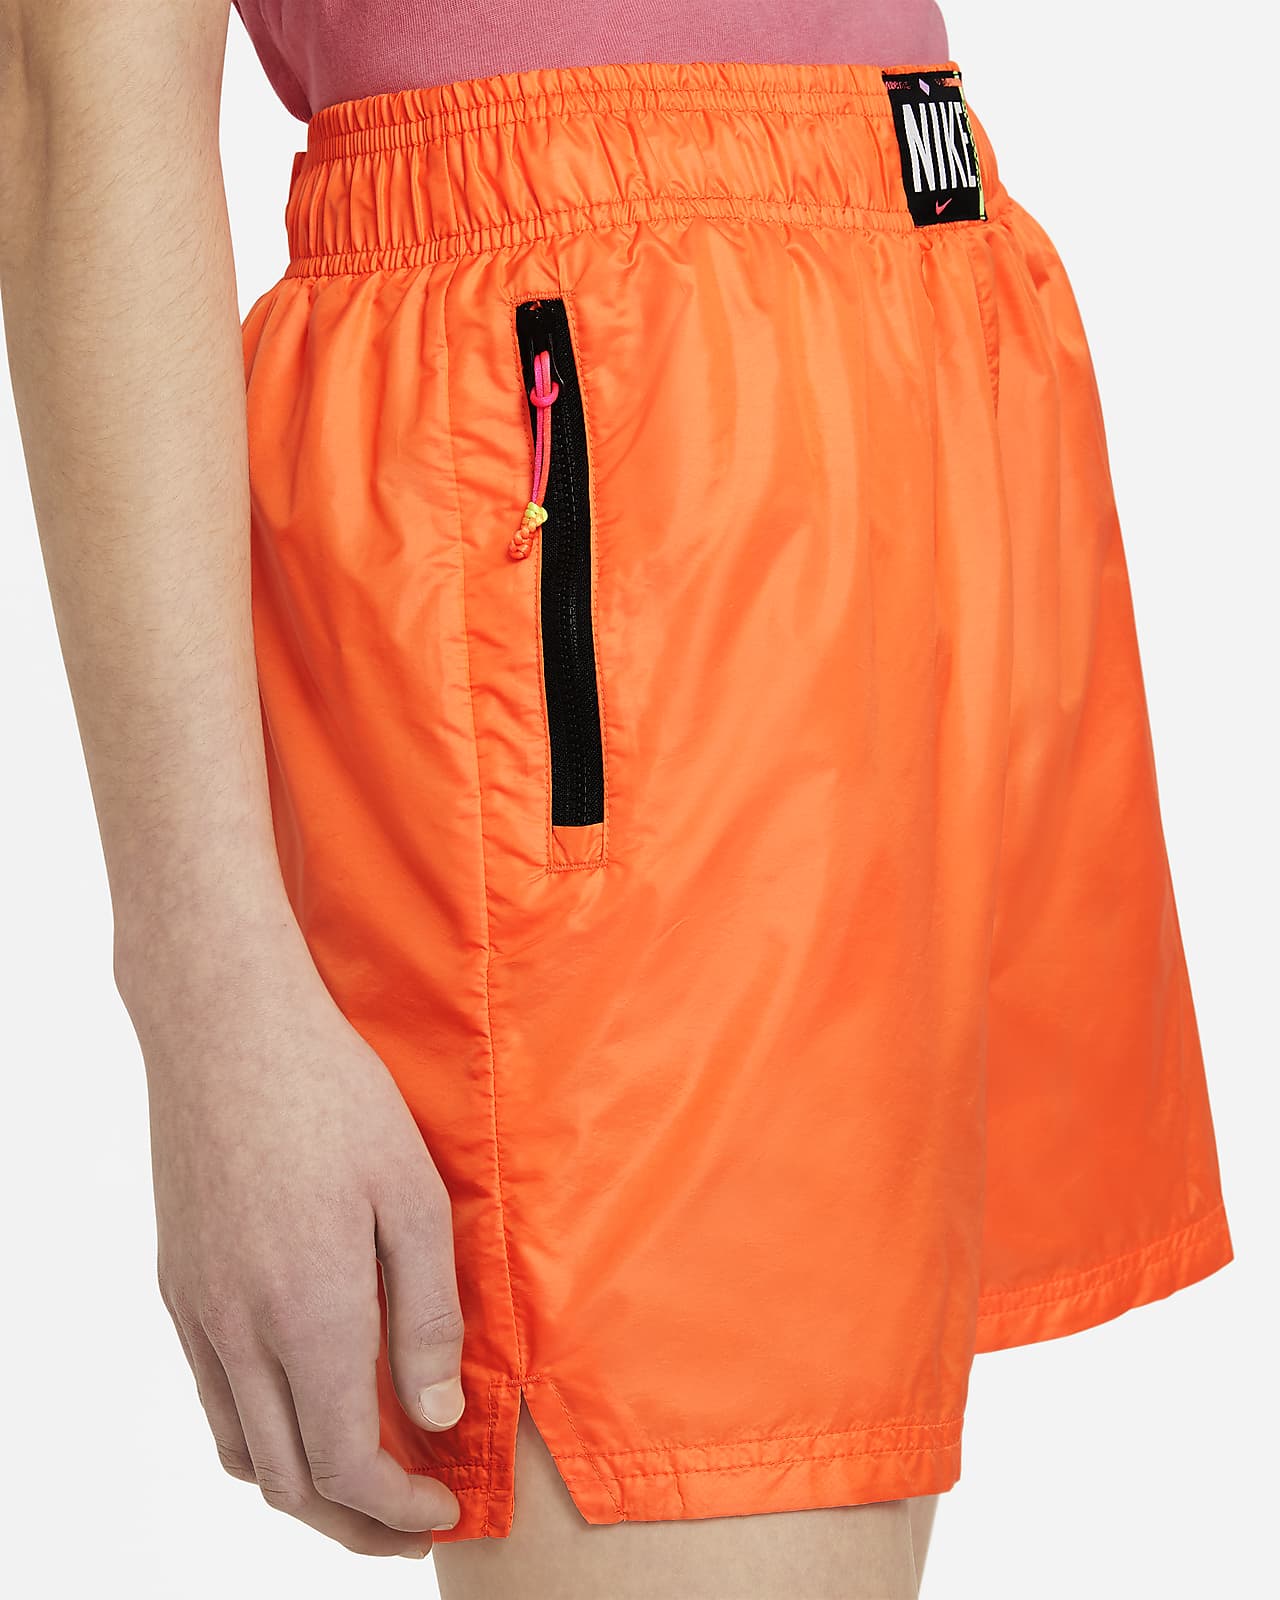 Nuevo L//M brillo pantalones de deporte transparente shorts transparente Sport shorts nylon pantalones